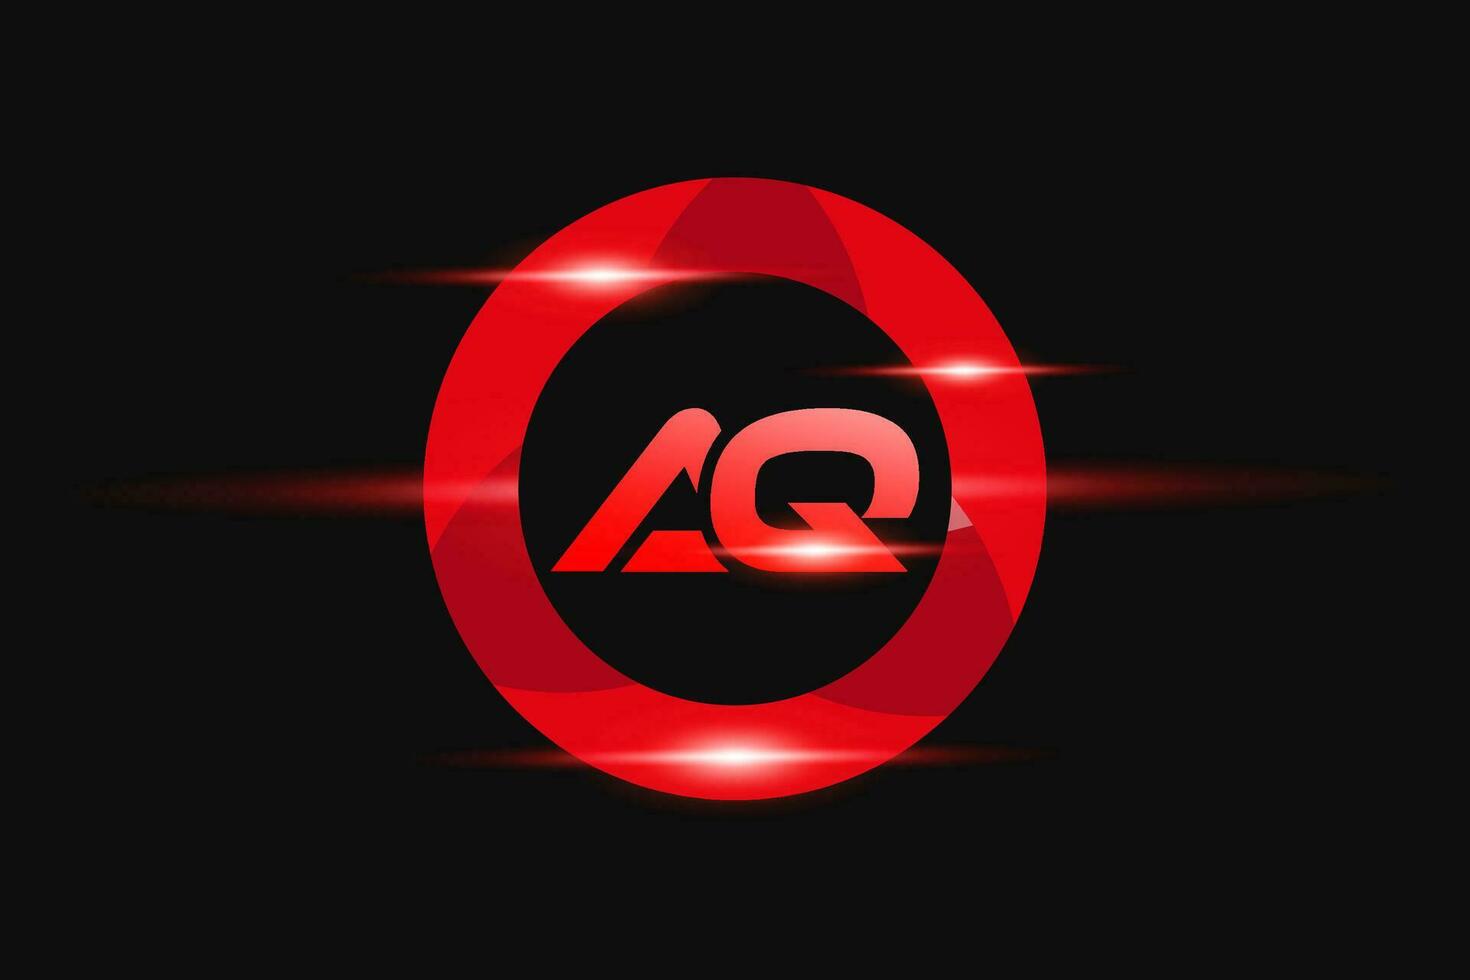 AG Red logo Design. Vector logo design for business